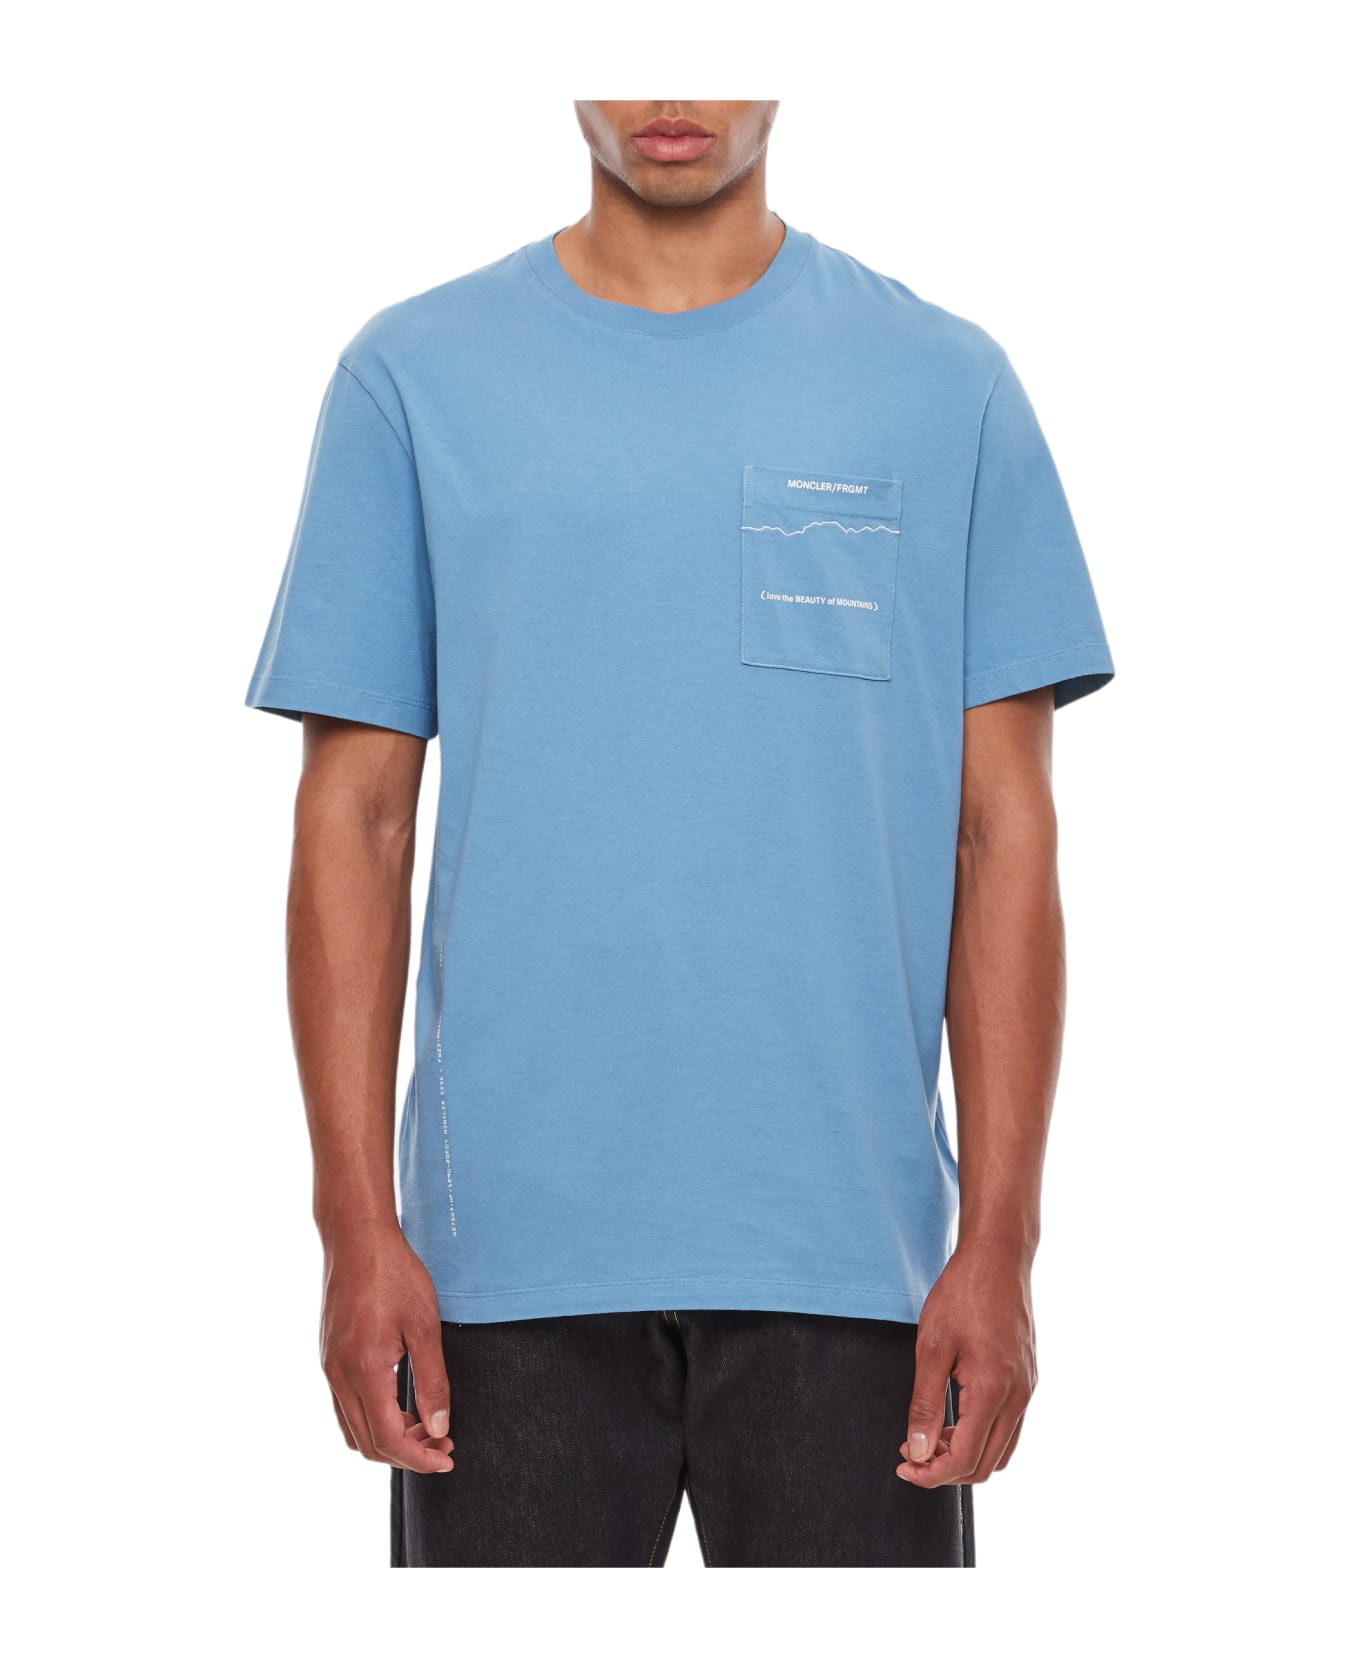 Moncler Genius Printed T-shirt Moncler X Frgmt - Clear Blue